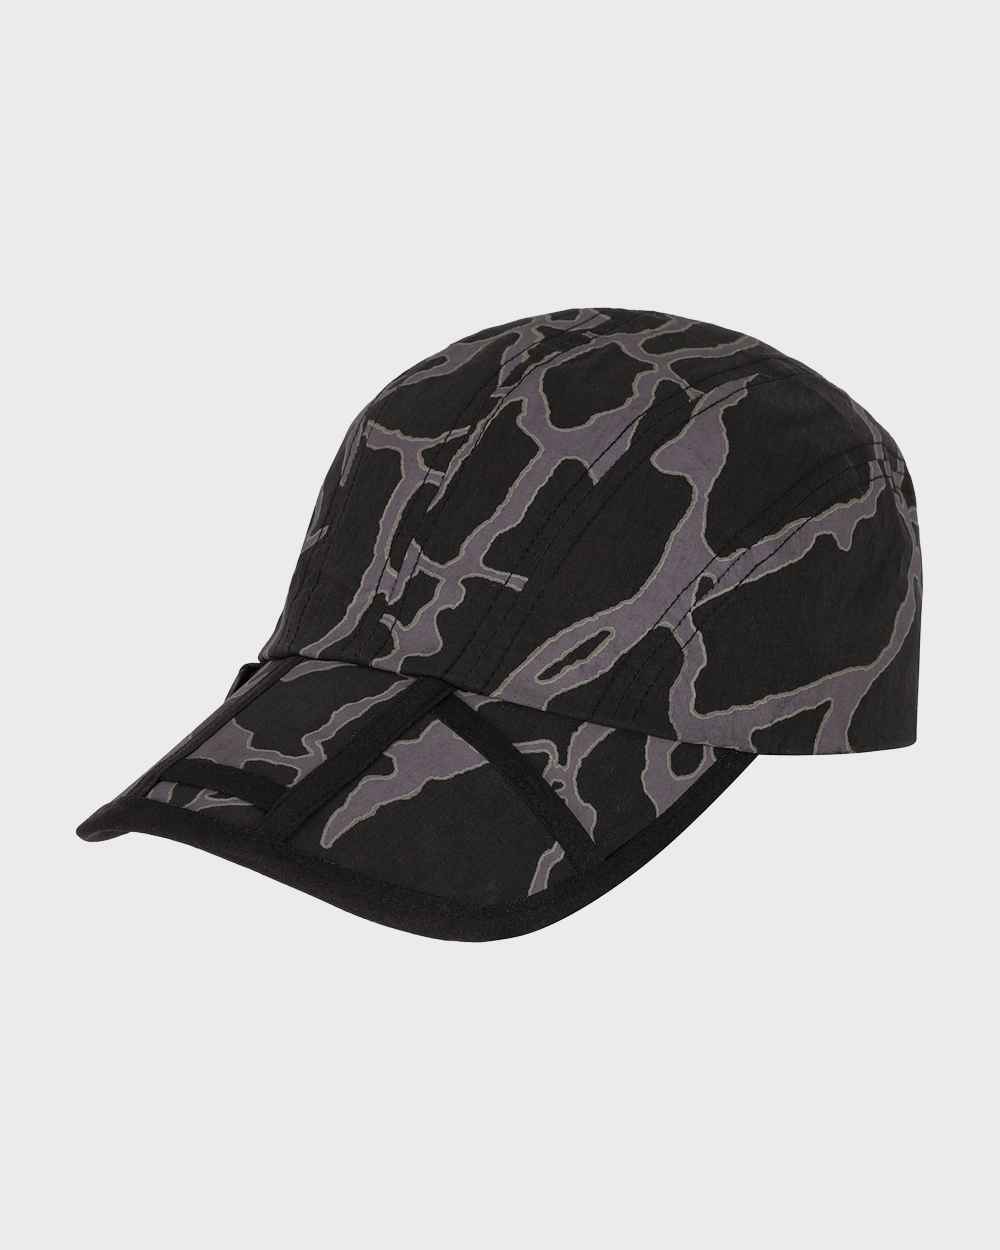 SOHC Patterned Cap (Black)